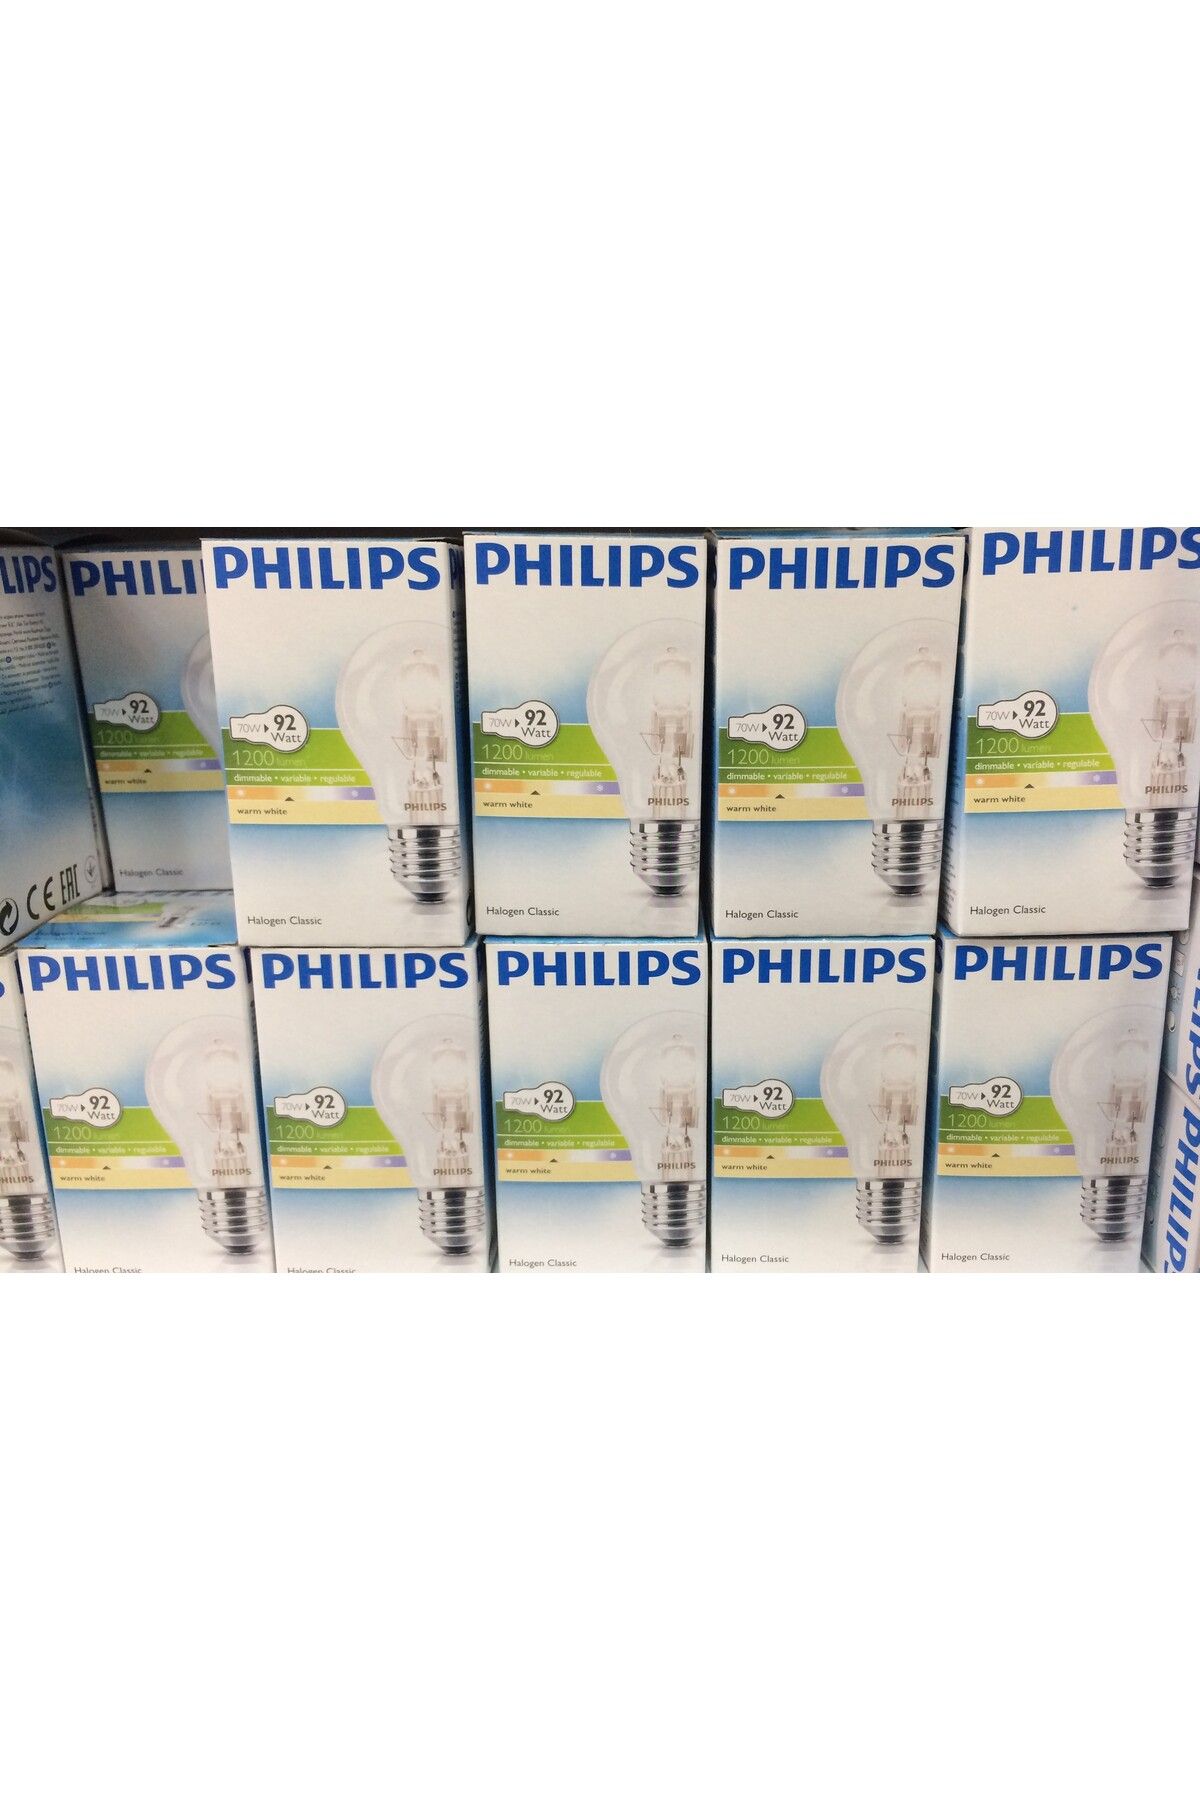 Philips 92W HALOJEN AMPUL E27-KLASİK AMPUL DİMMERLENİR-1 ADET